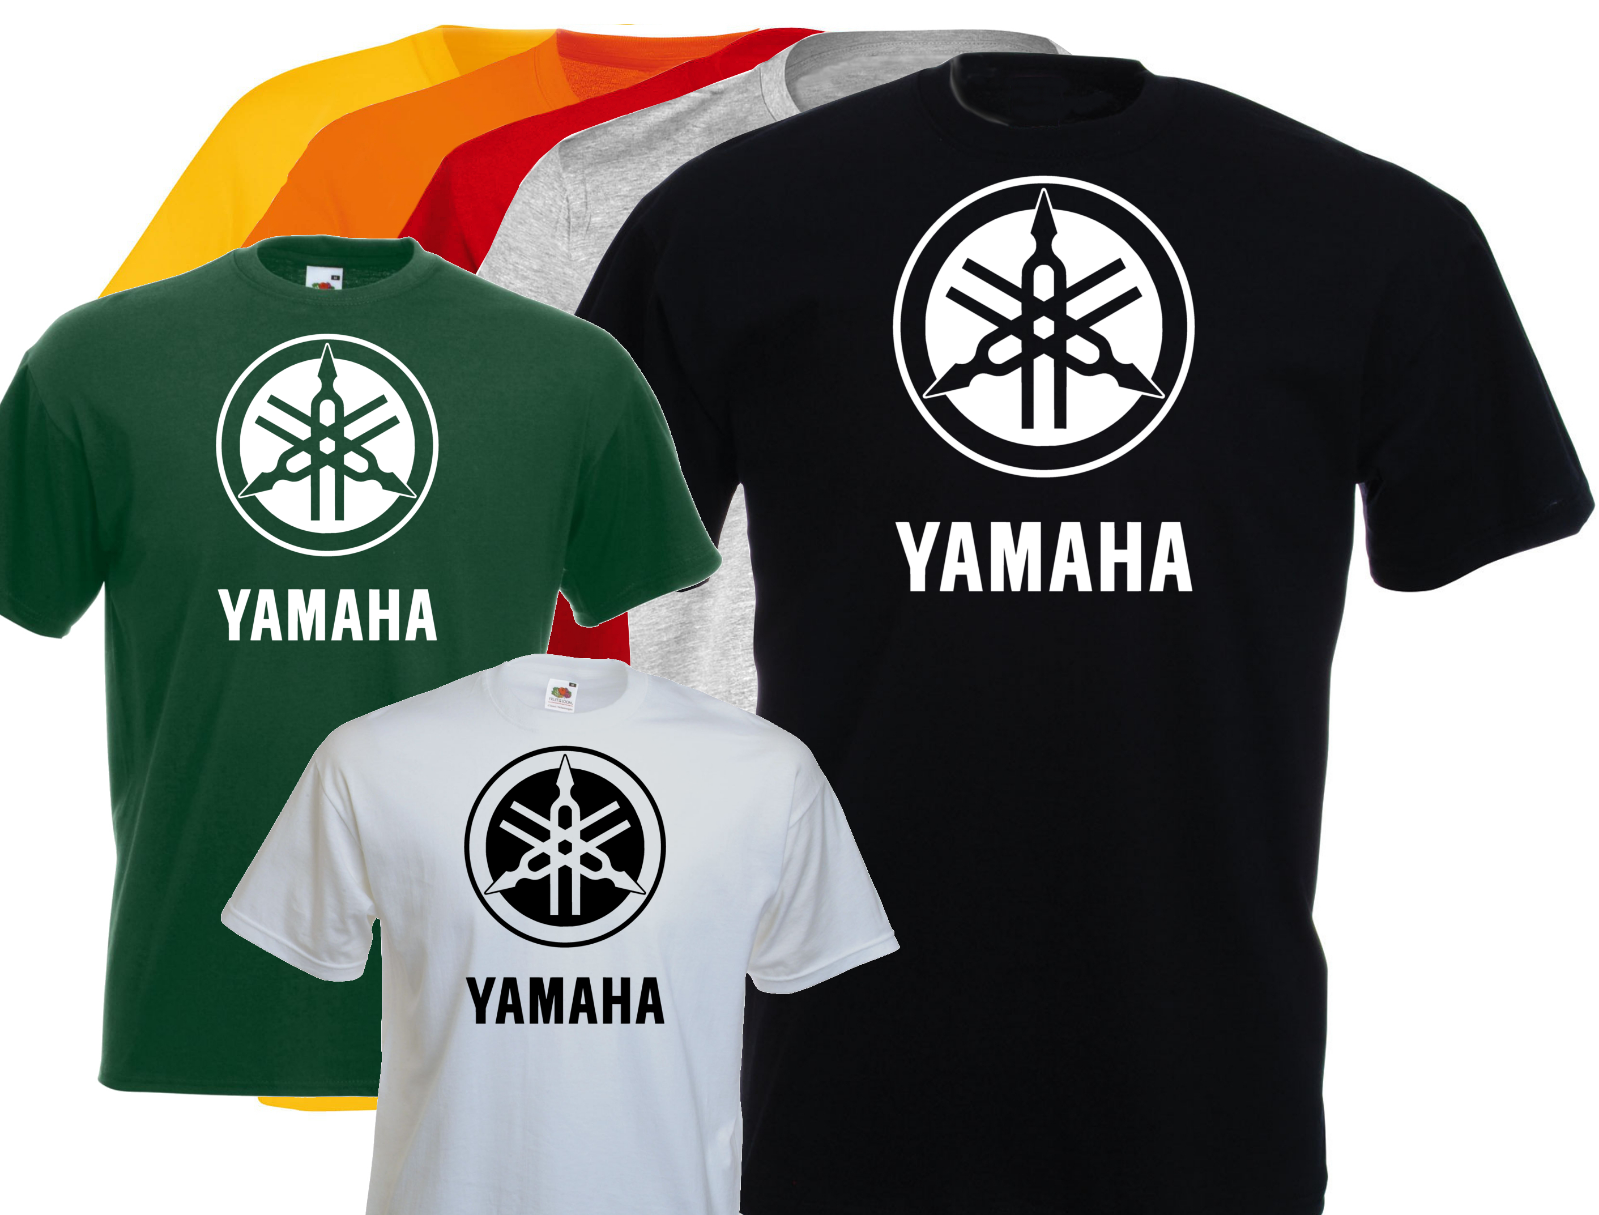 T-shirt 5 ☆ very popular logo yamaha moto nippon m vintage s biker l 5 popular